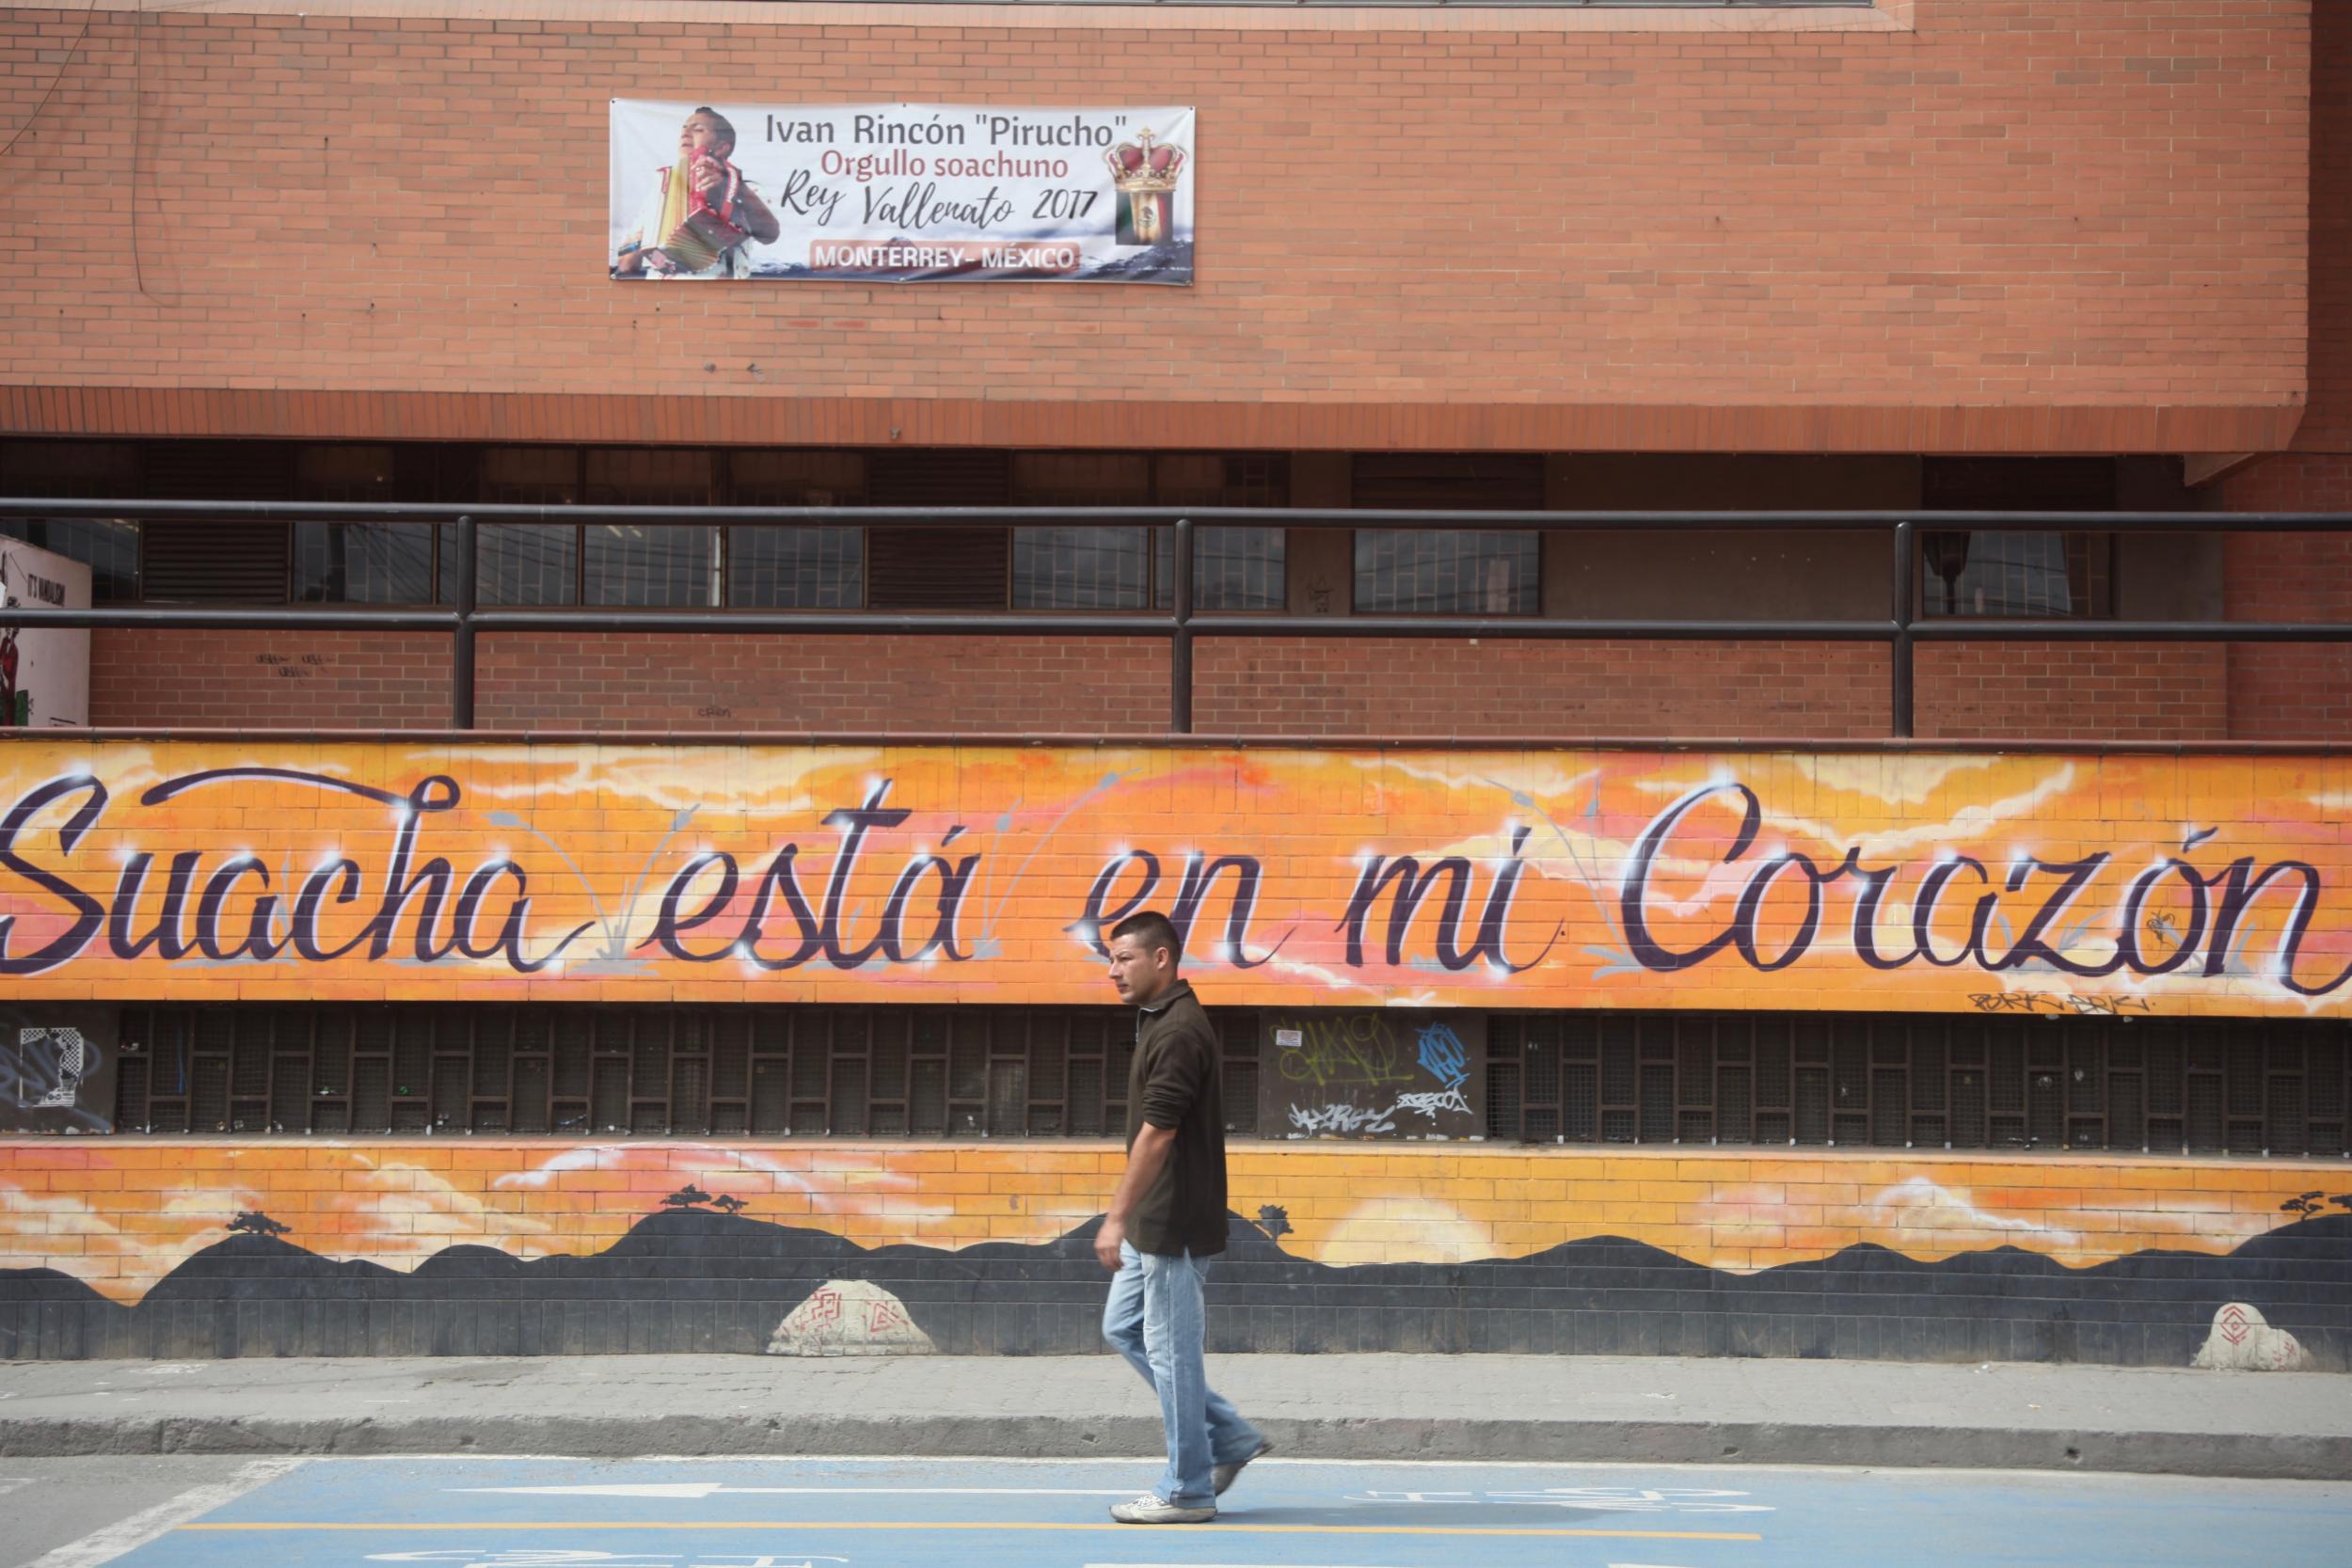 Soacha has long been considered a dangerous area of Bogota